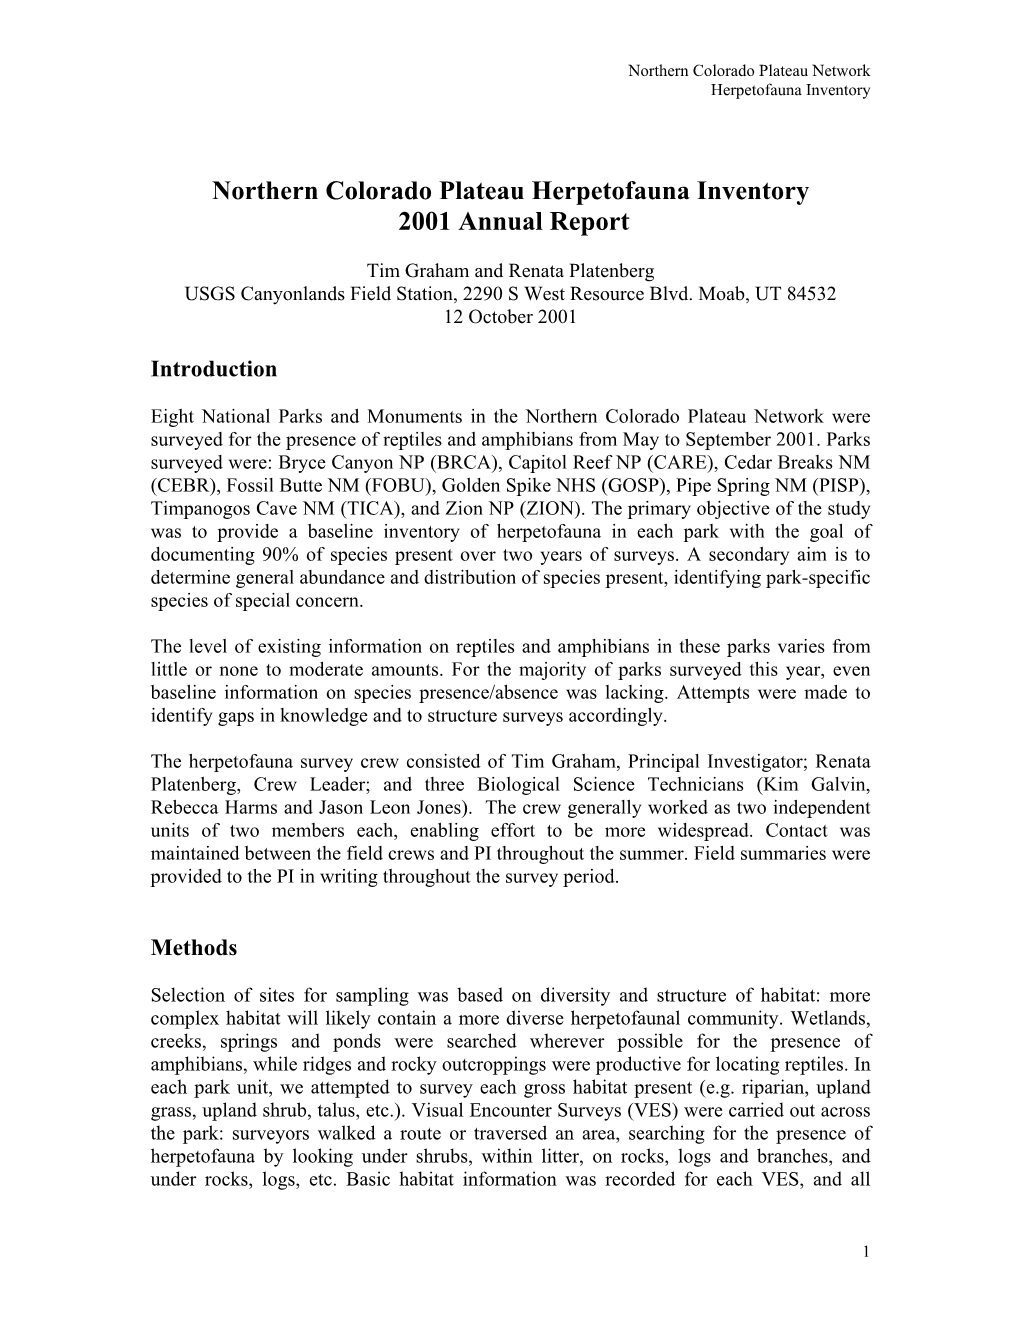 Northern Colorado Plateau Herpetofauna Inventory 2001 Annual Report